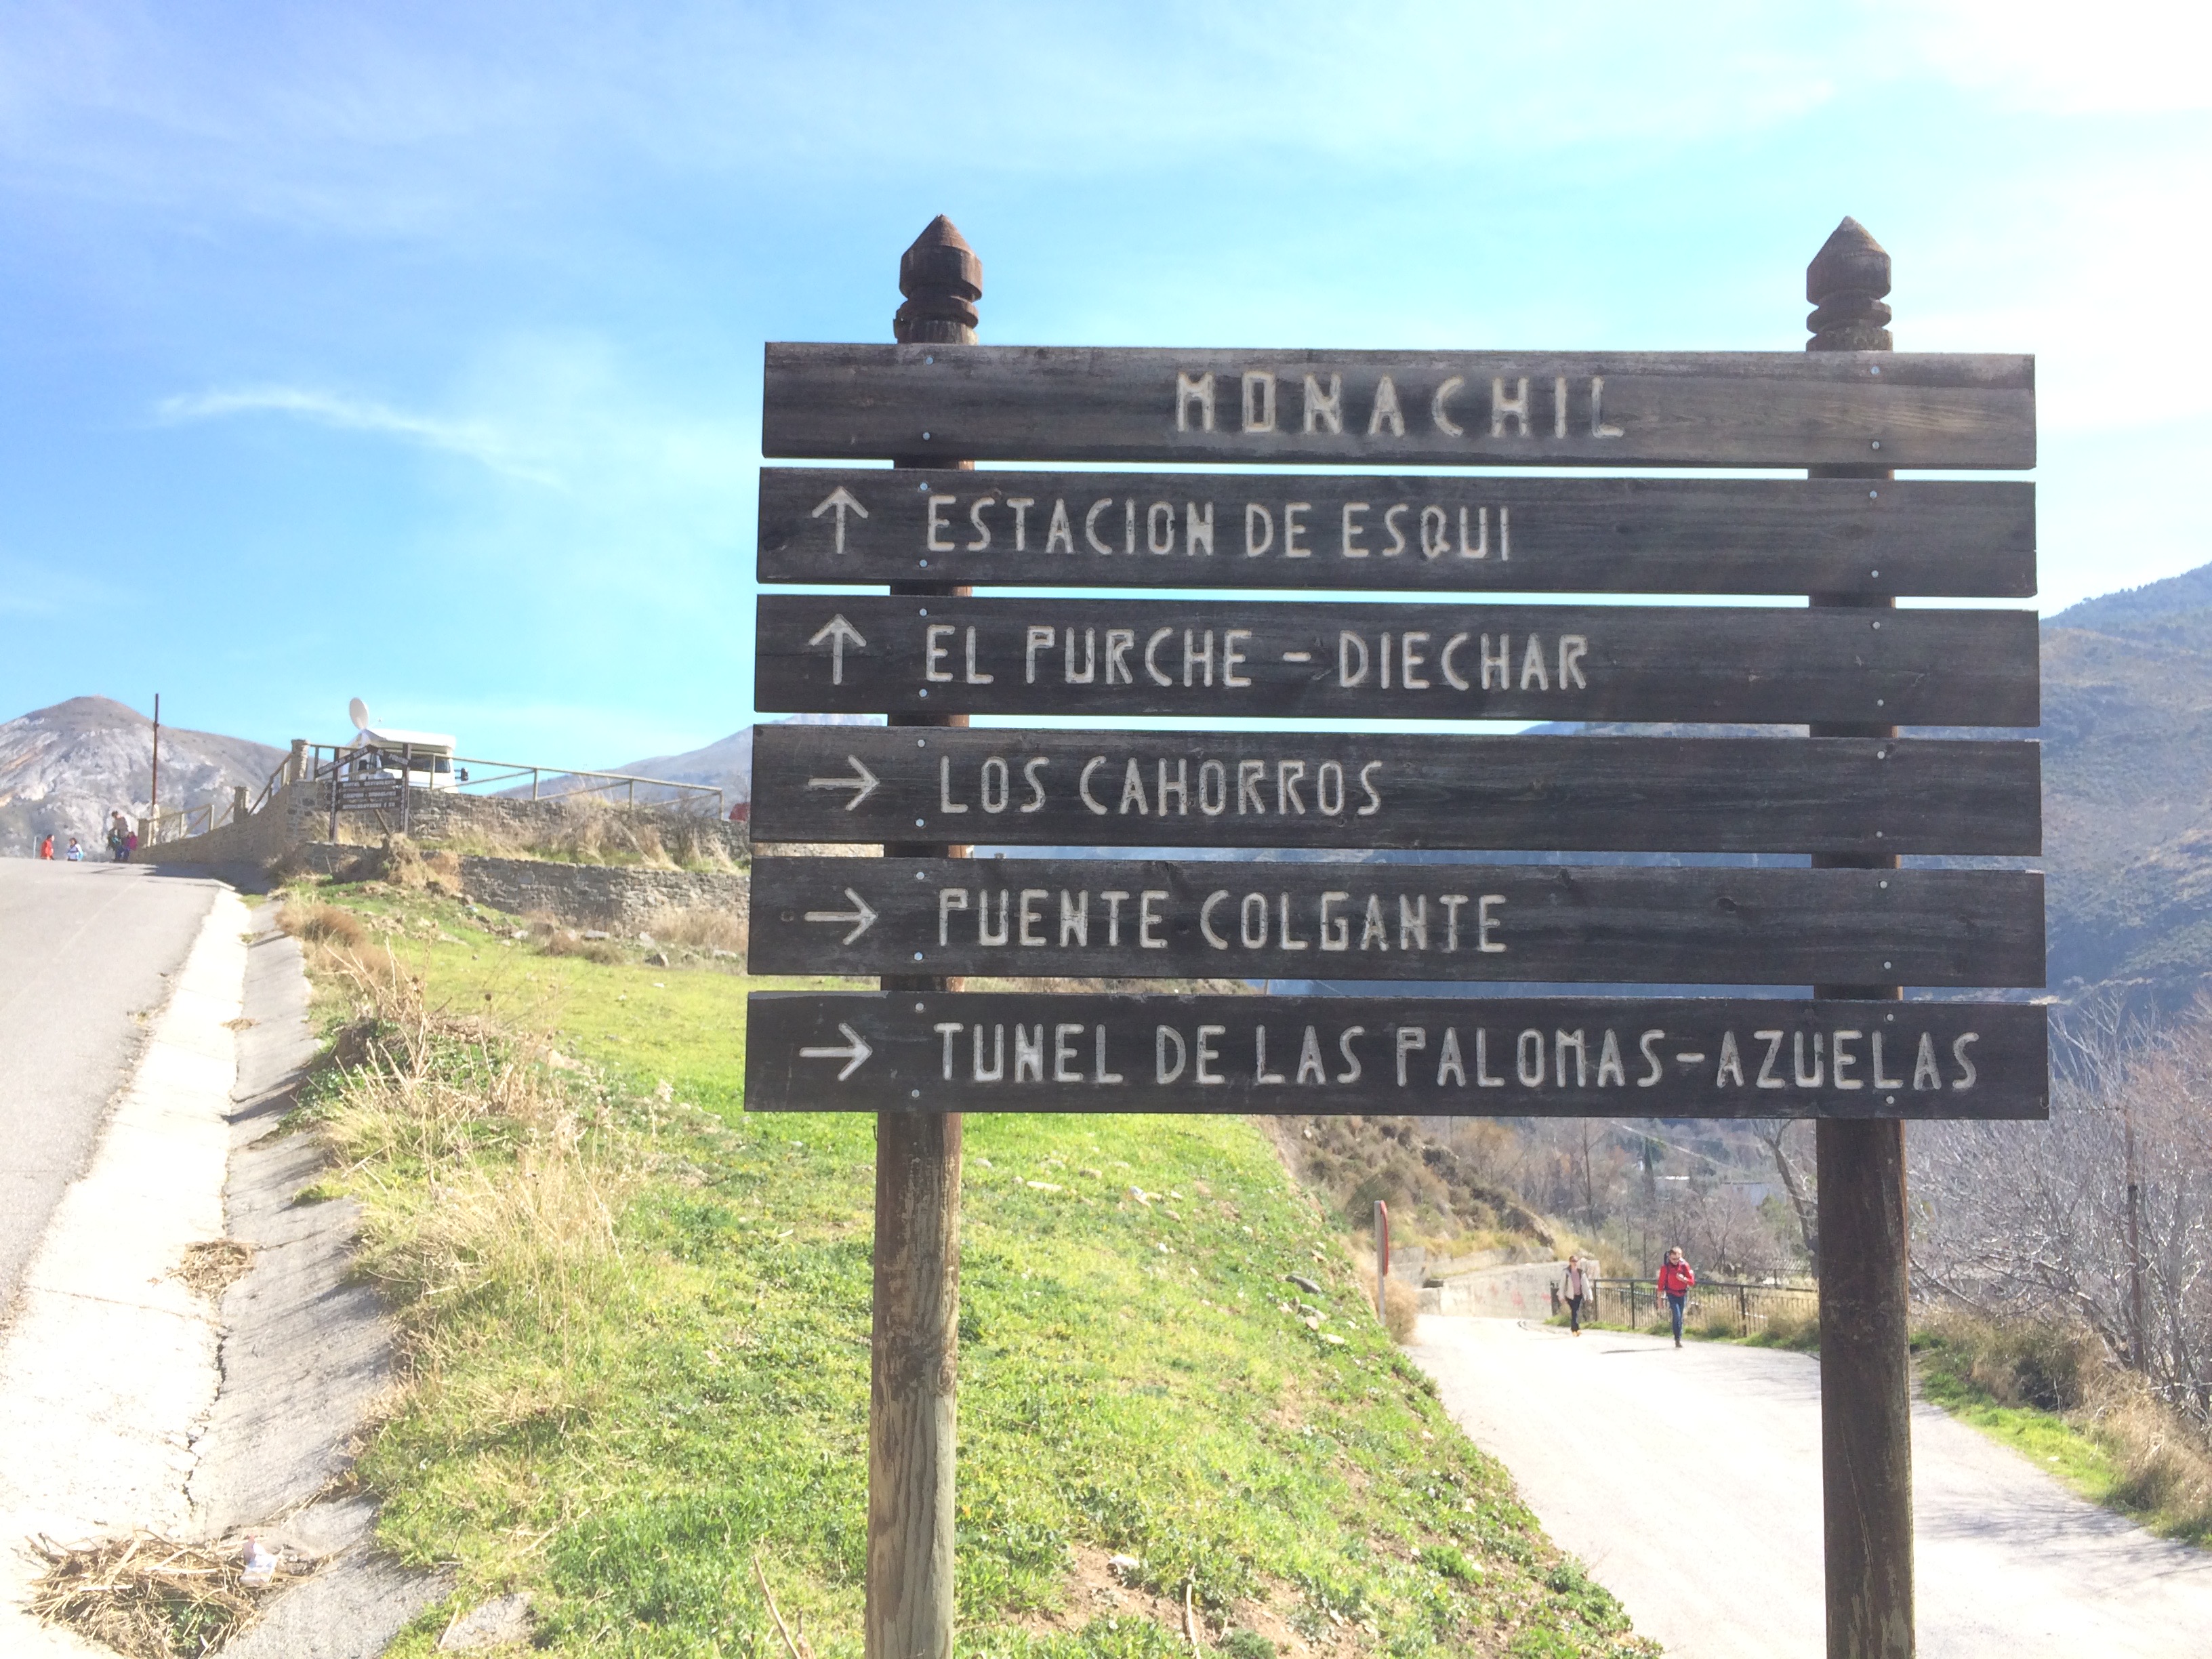 Los Cahorros gorge walk Monachil start